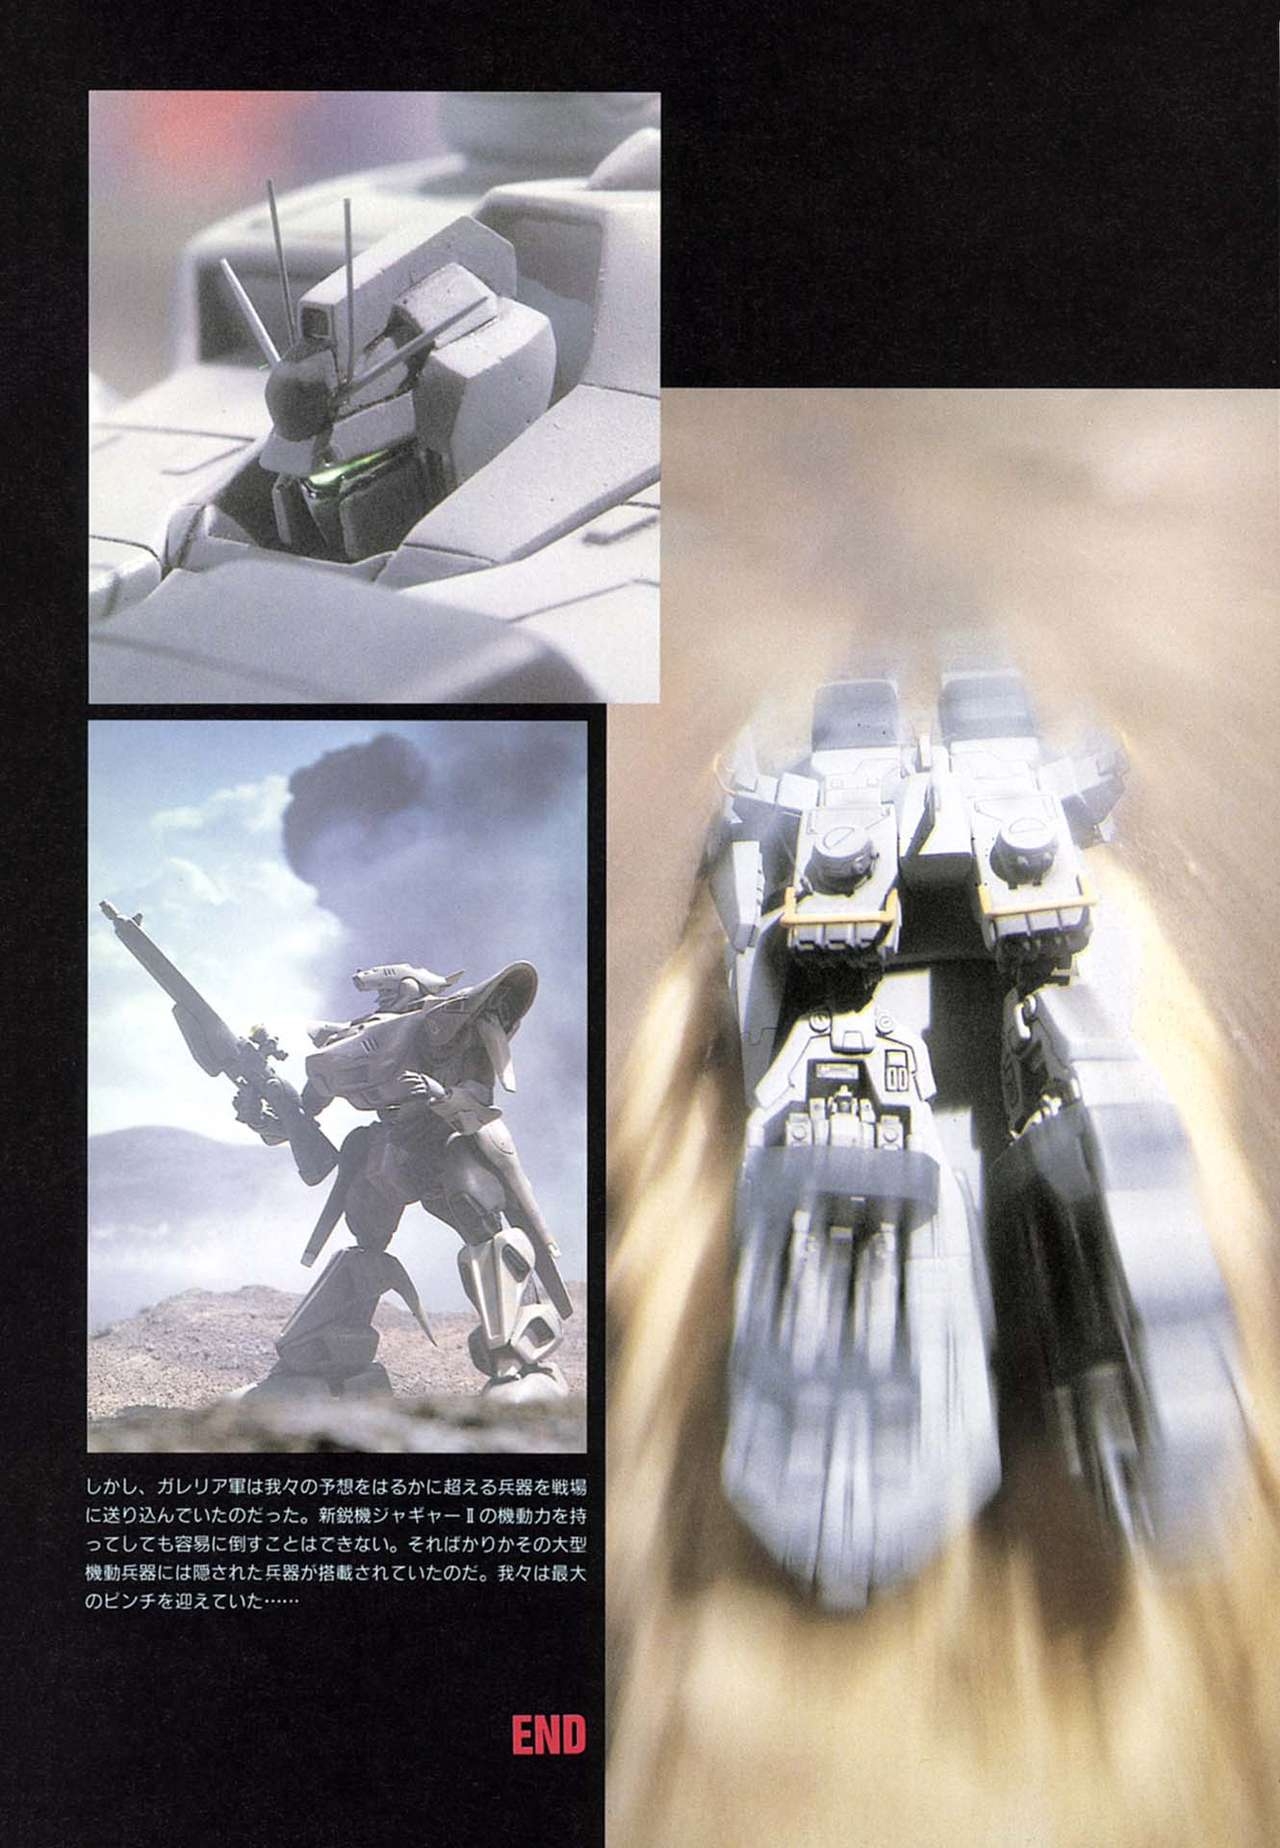 [Kazuhisa Kondo] Kazuhisa Kondo 2D & 3D Works - Go Ahead - From Mobile Suit Gundam to Original Mechanism 147